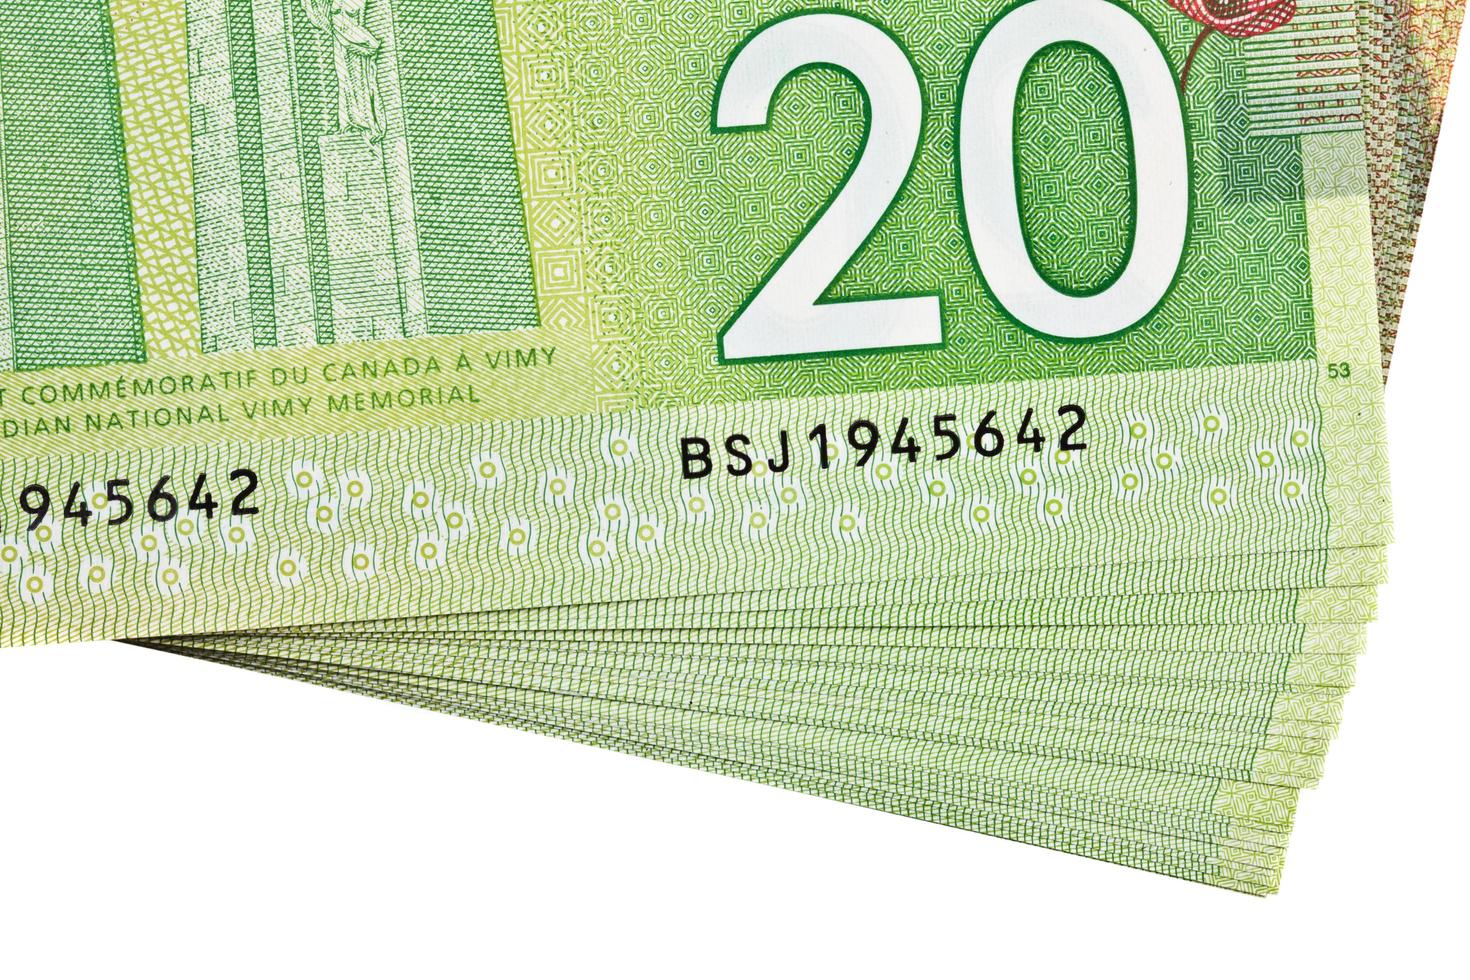 Ottawa, Canada, 13 april 2013, het nieuwe polymeer twintig dollarbiljetten detail foto